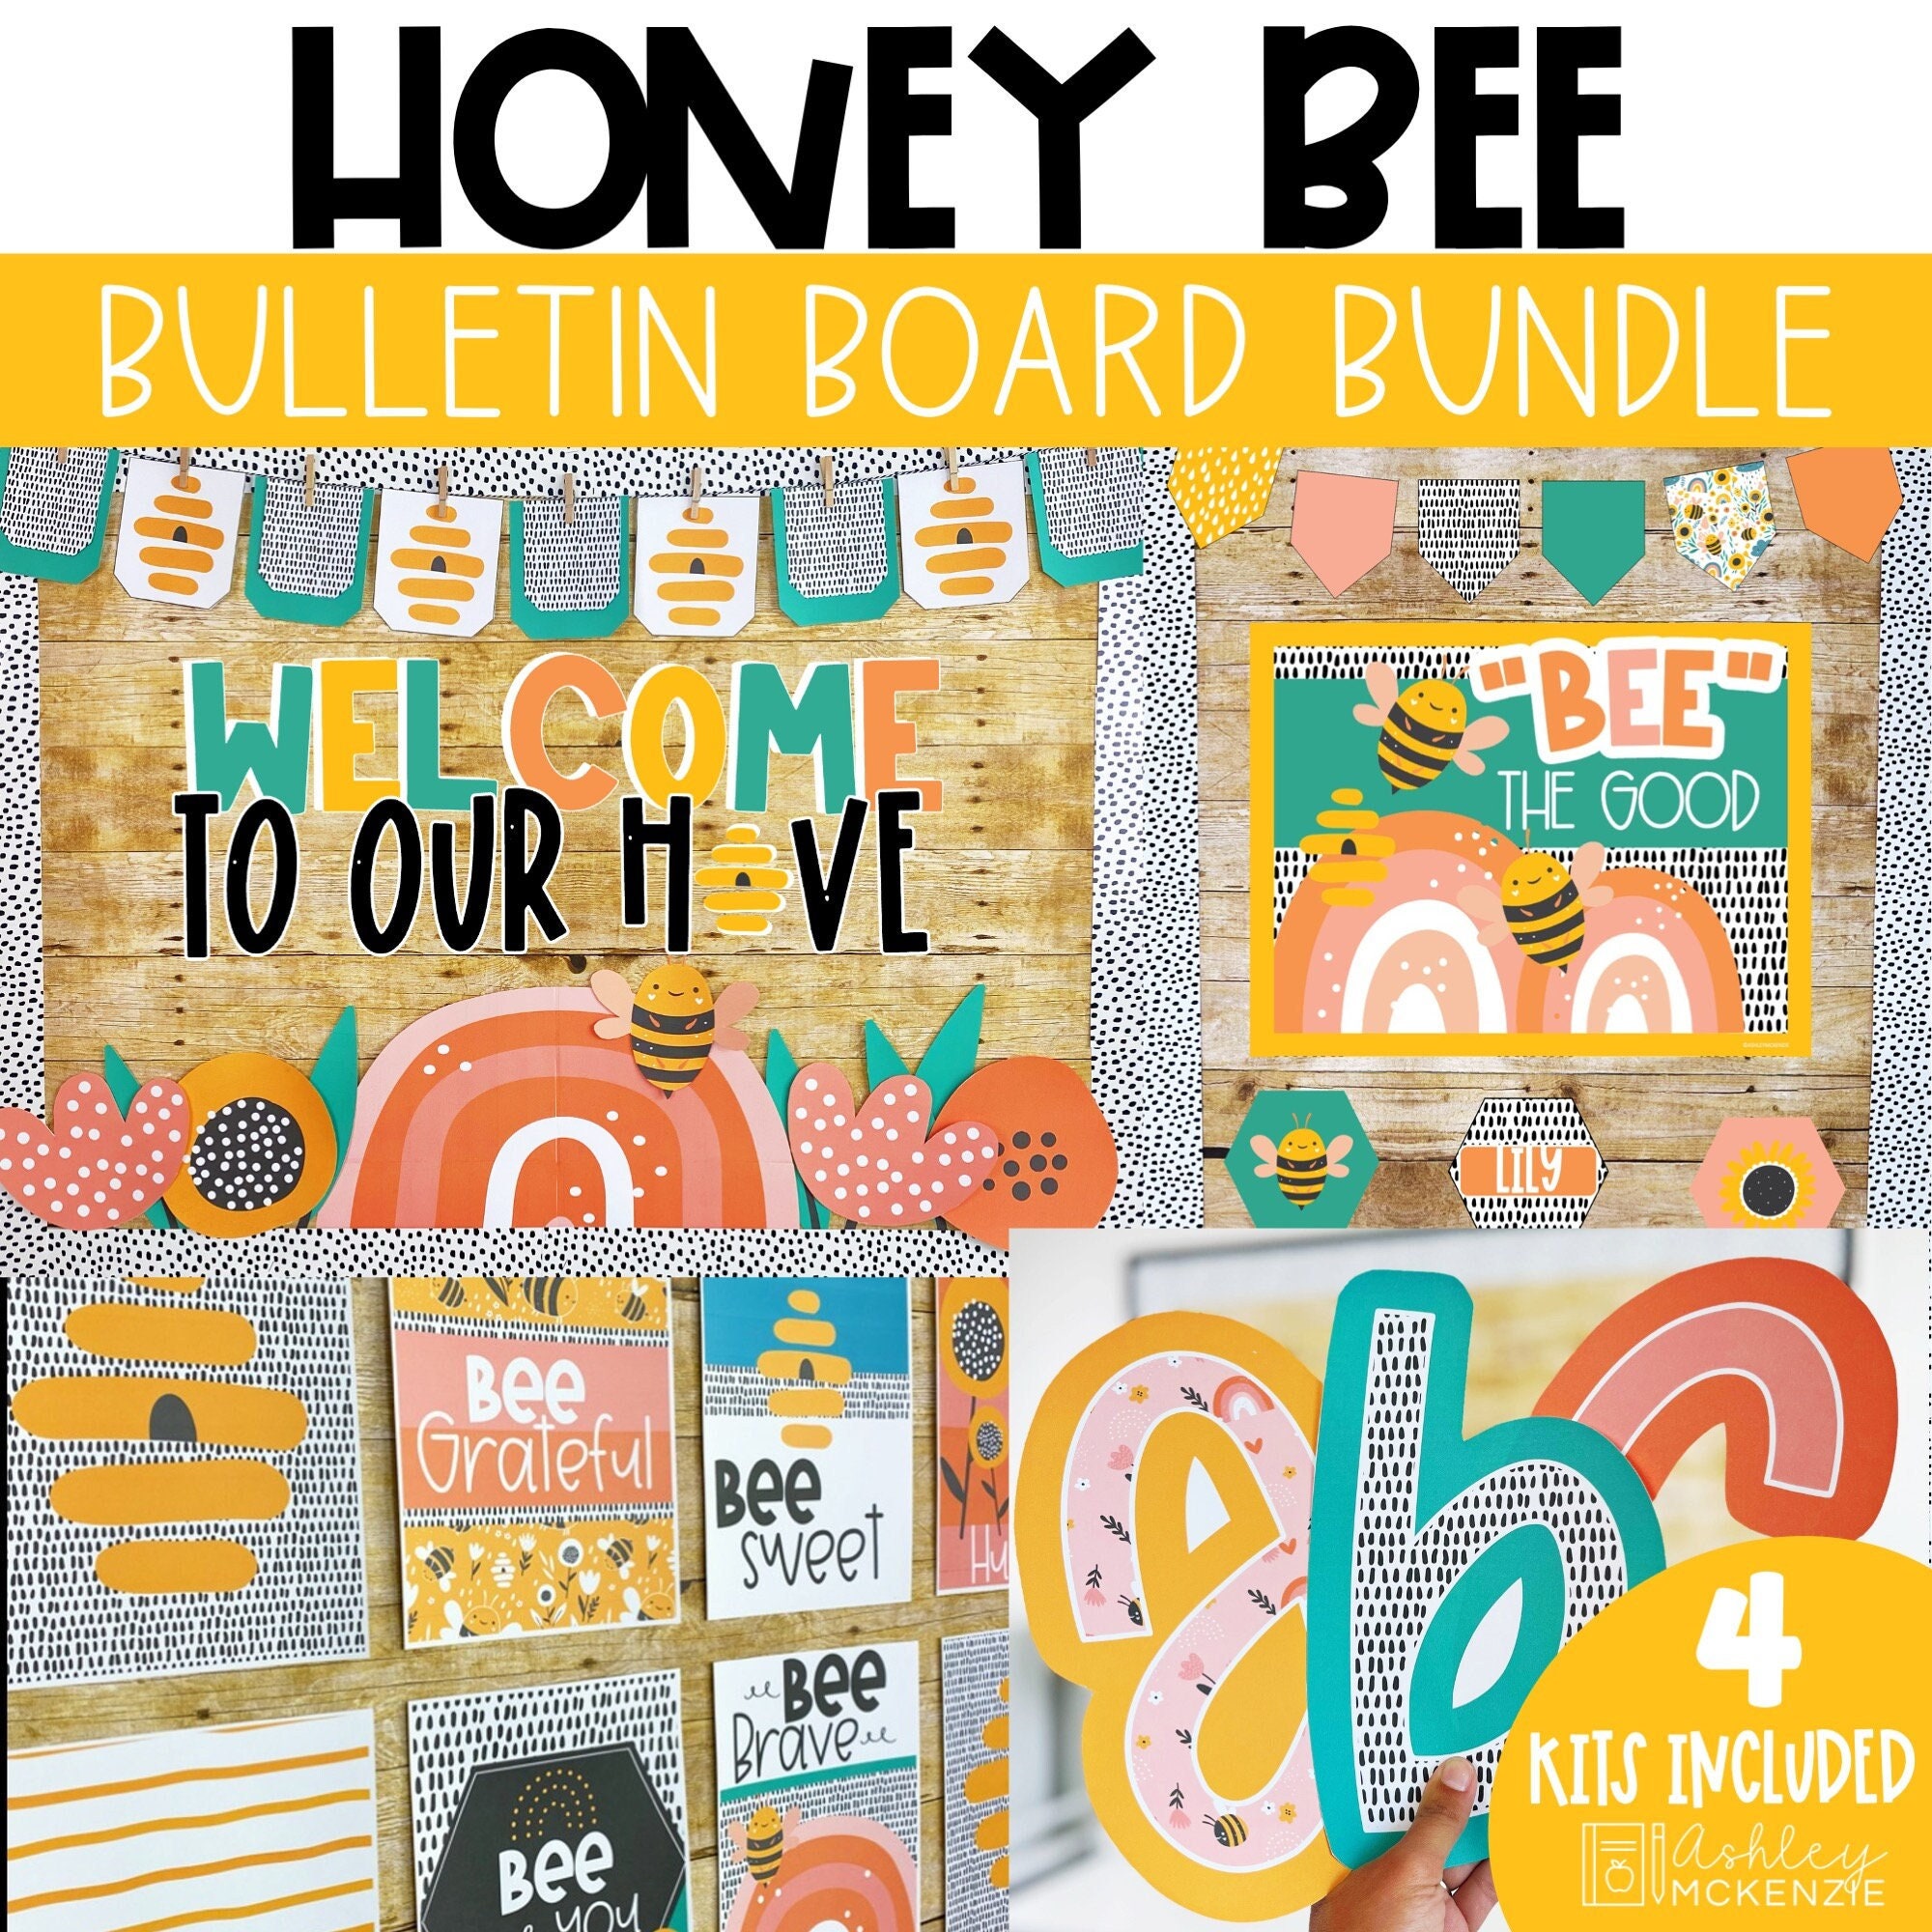 Boho Honey Bee Classroom Decor Bundle by Ashley McKenzie